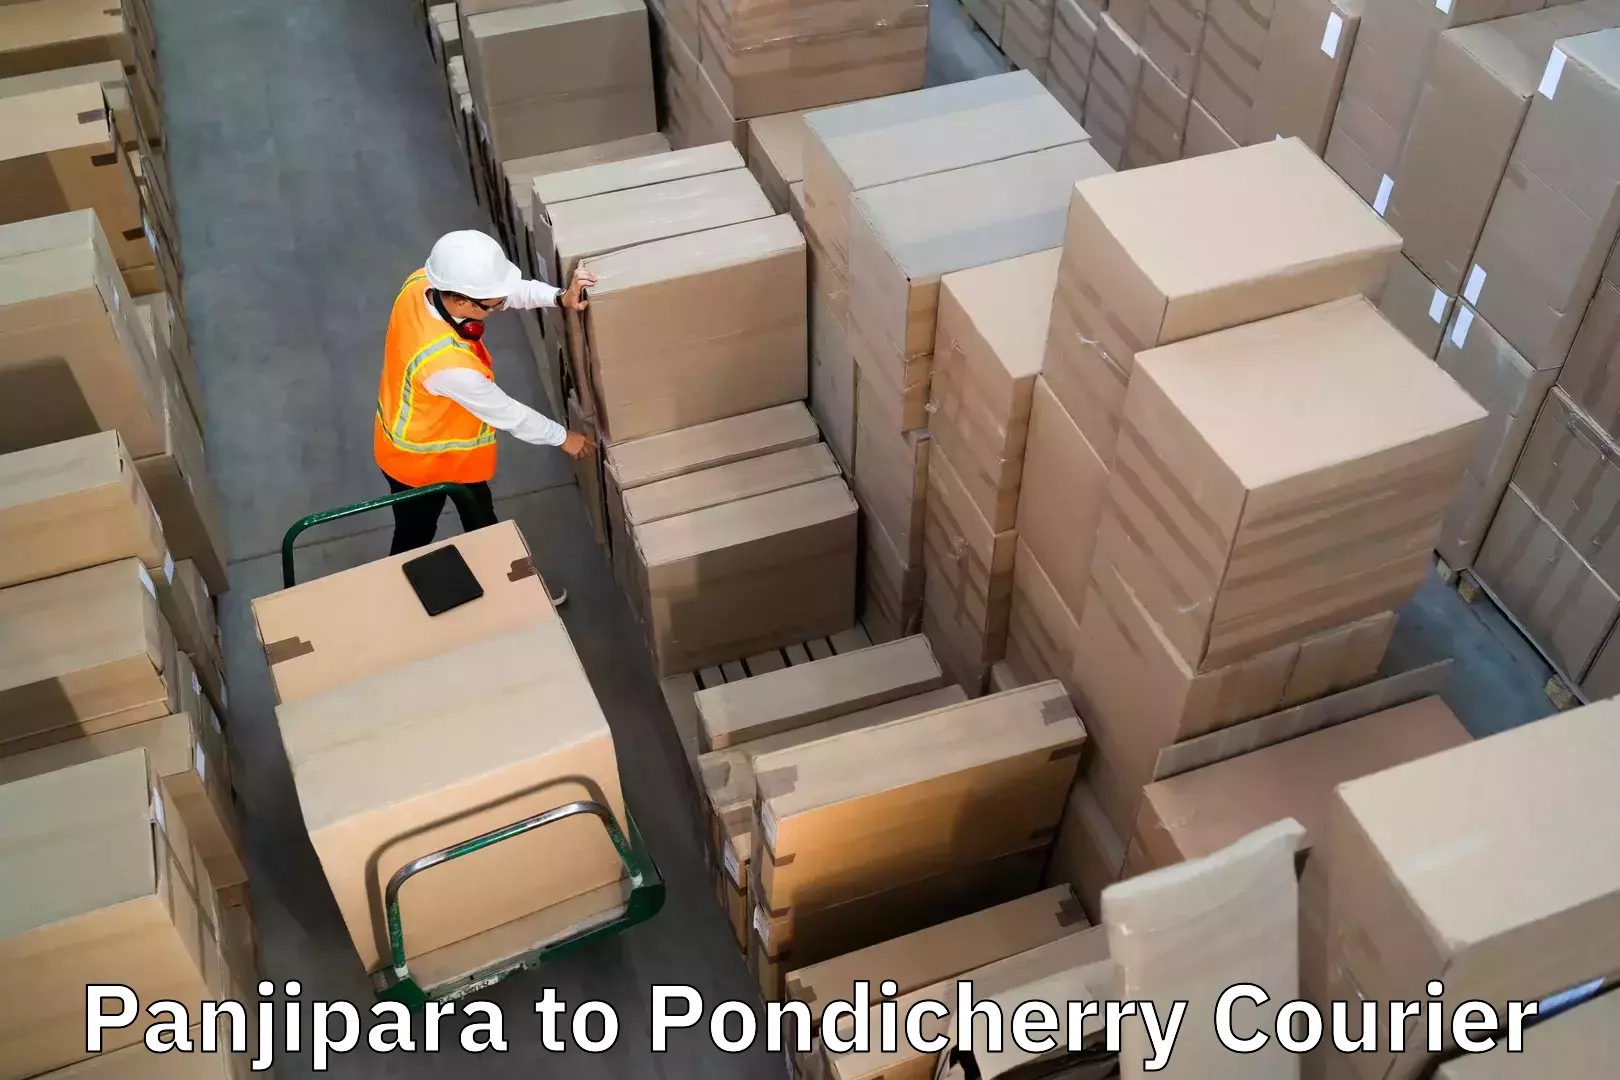 Luggage delivery app Panjipara to Pondicherry